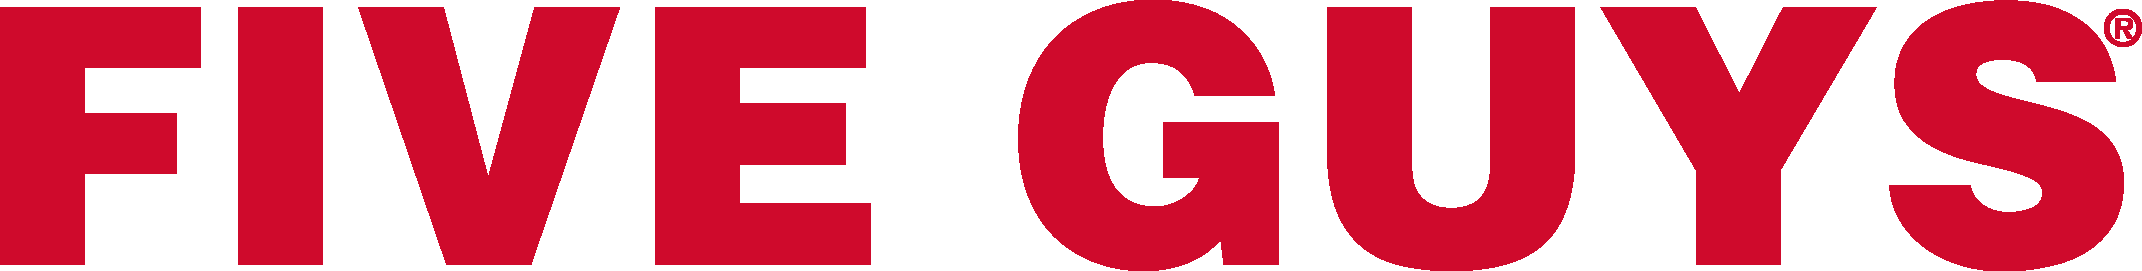 five-guys-logo%20(1).png